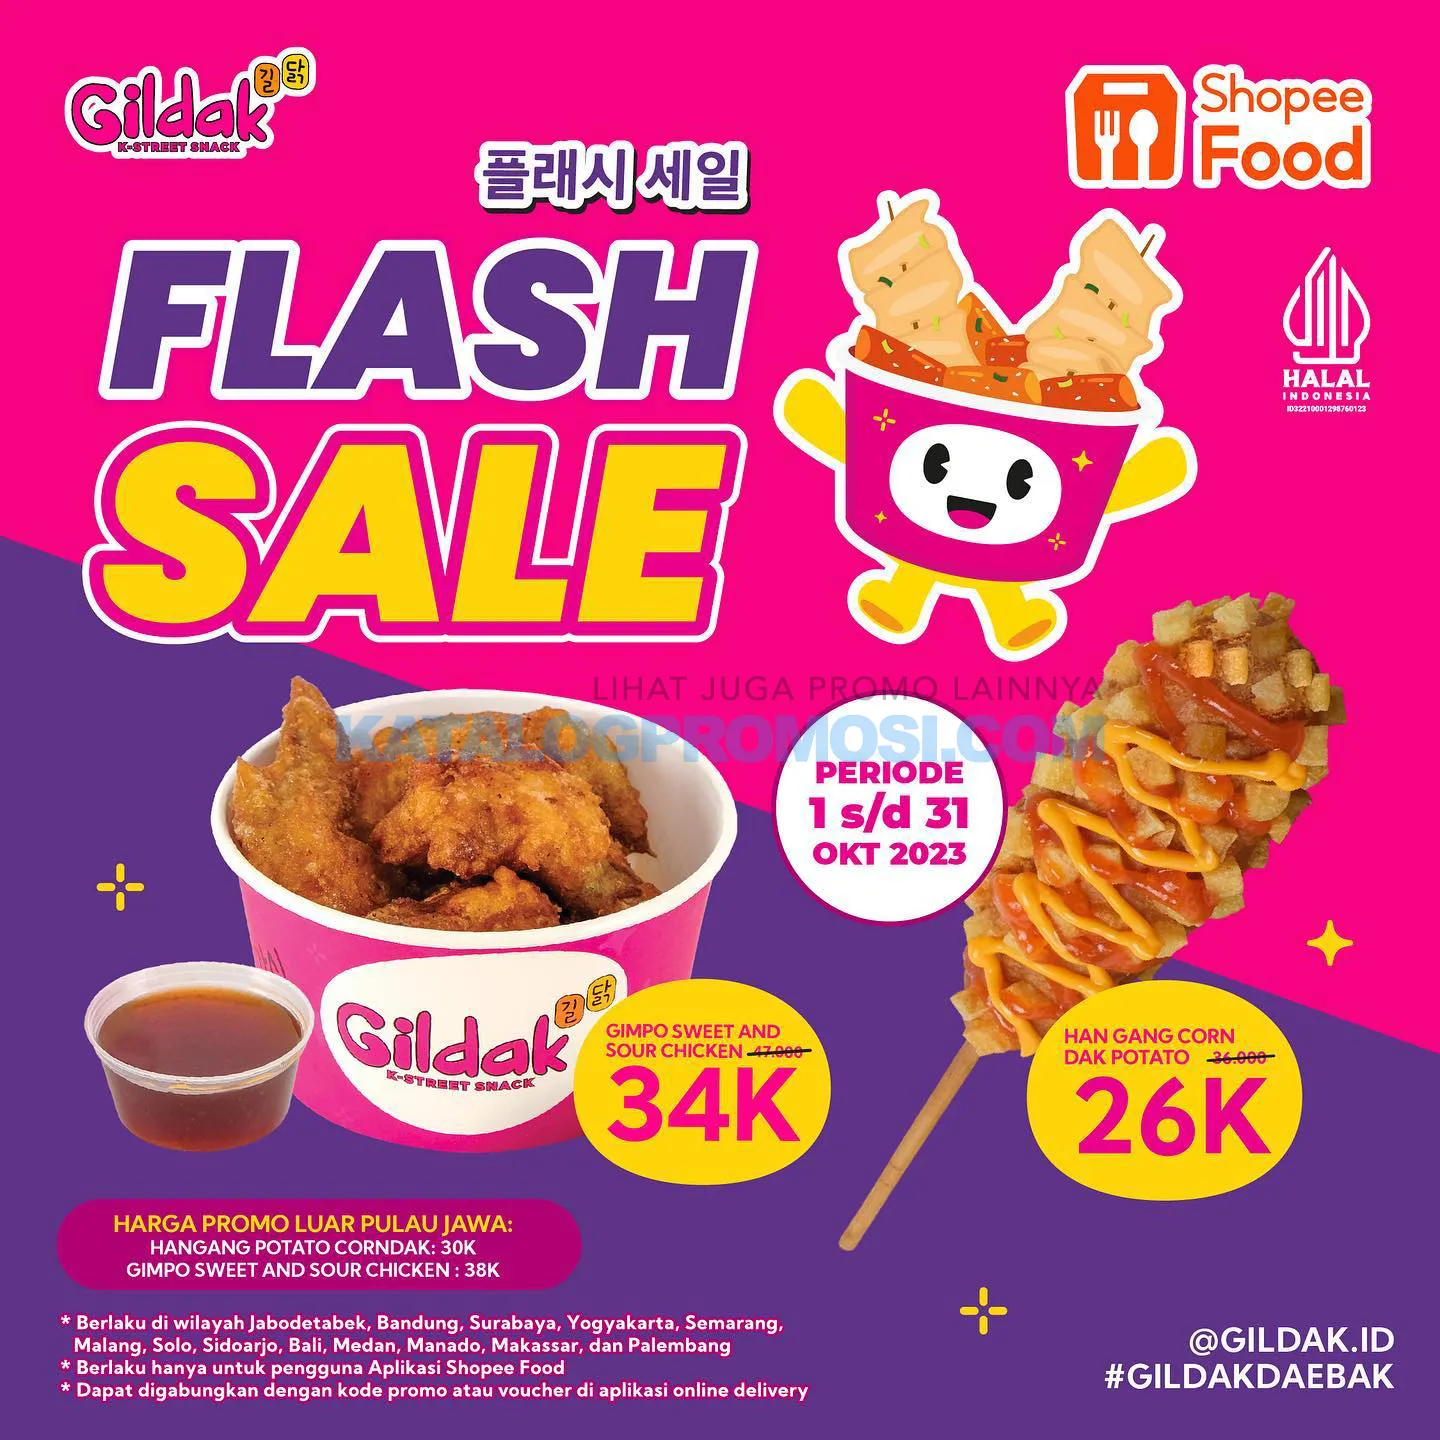 Promo GILDAK SHOPEEFOOD FLASH SALE - Harga Spesial untuk Gimpo Sweet and Sour Chicken dan Han Gang Corn Dak Potato